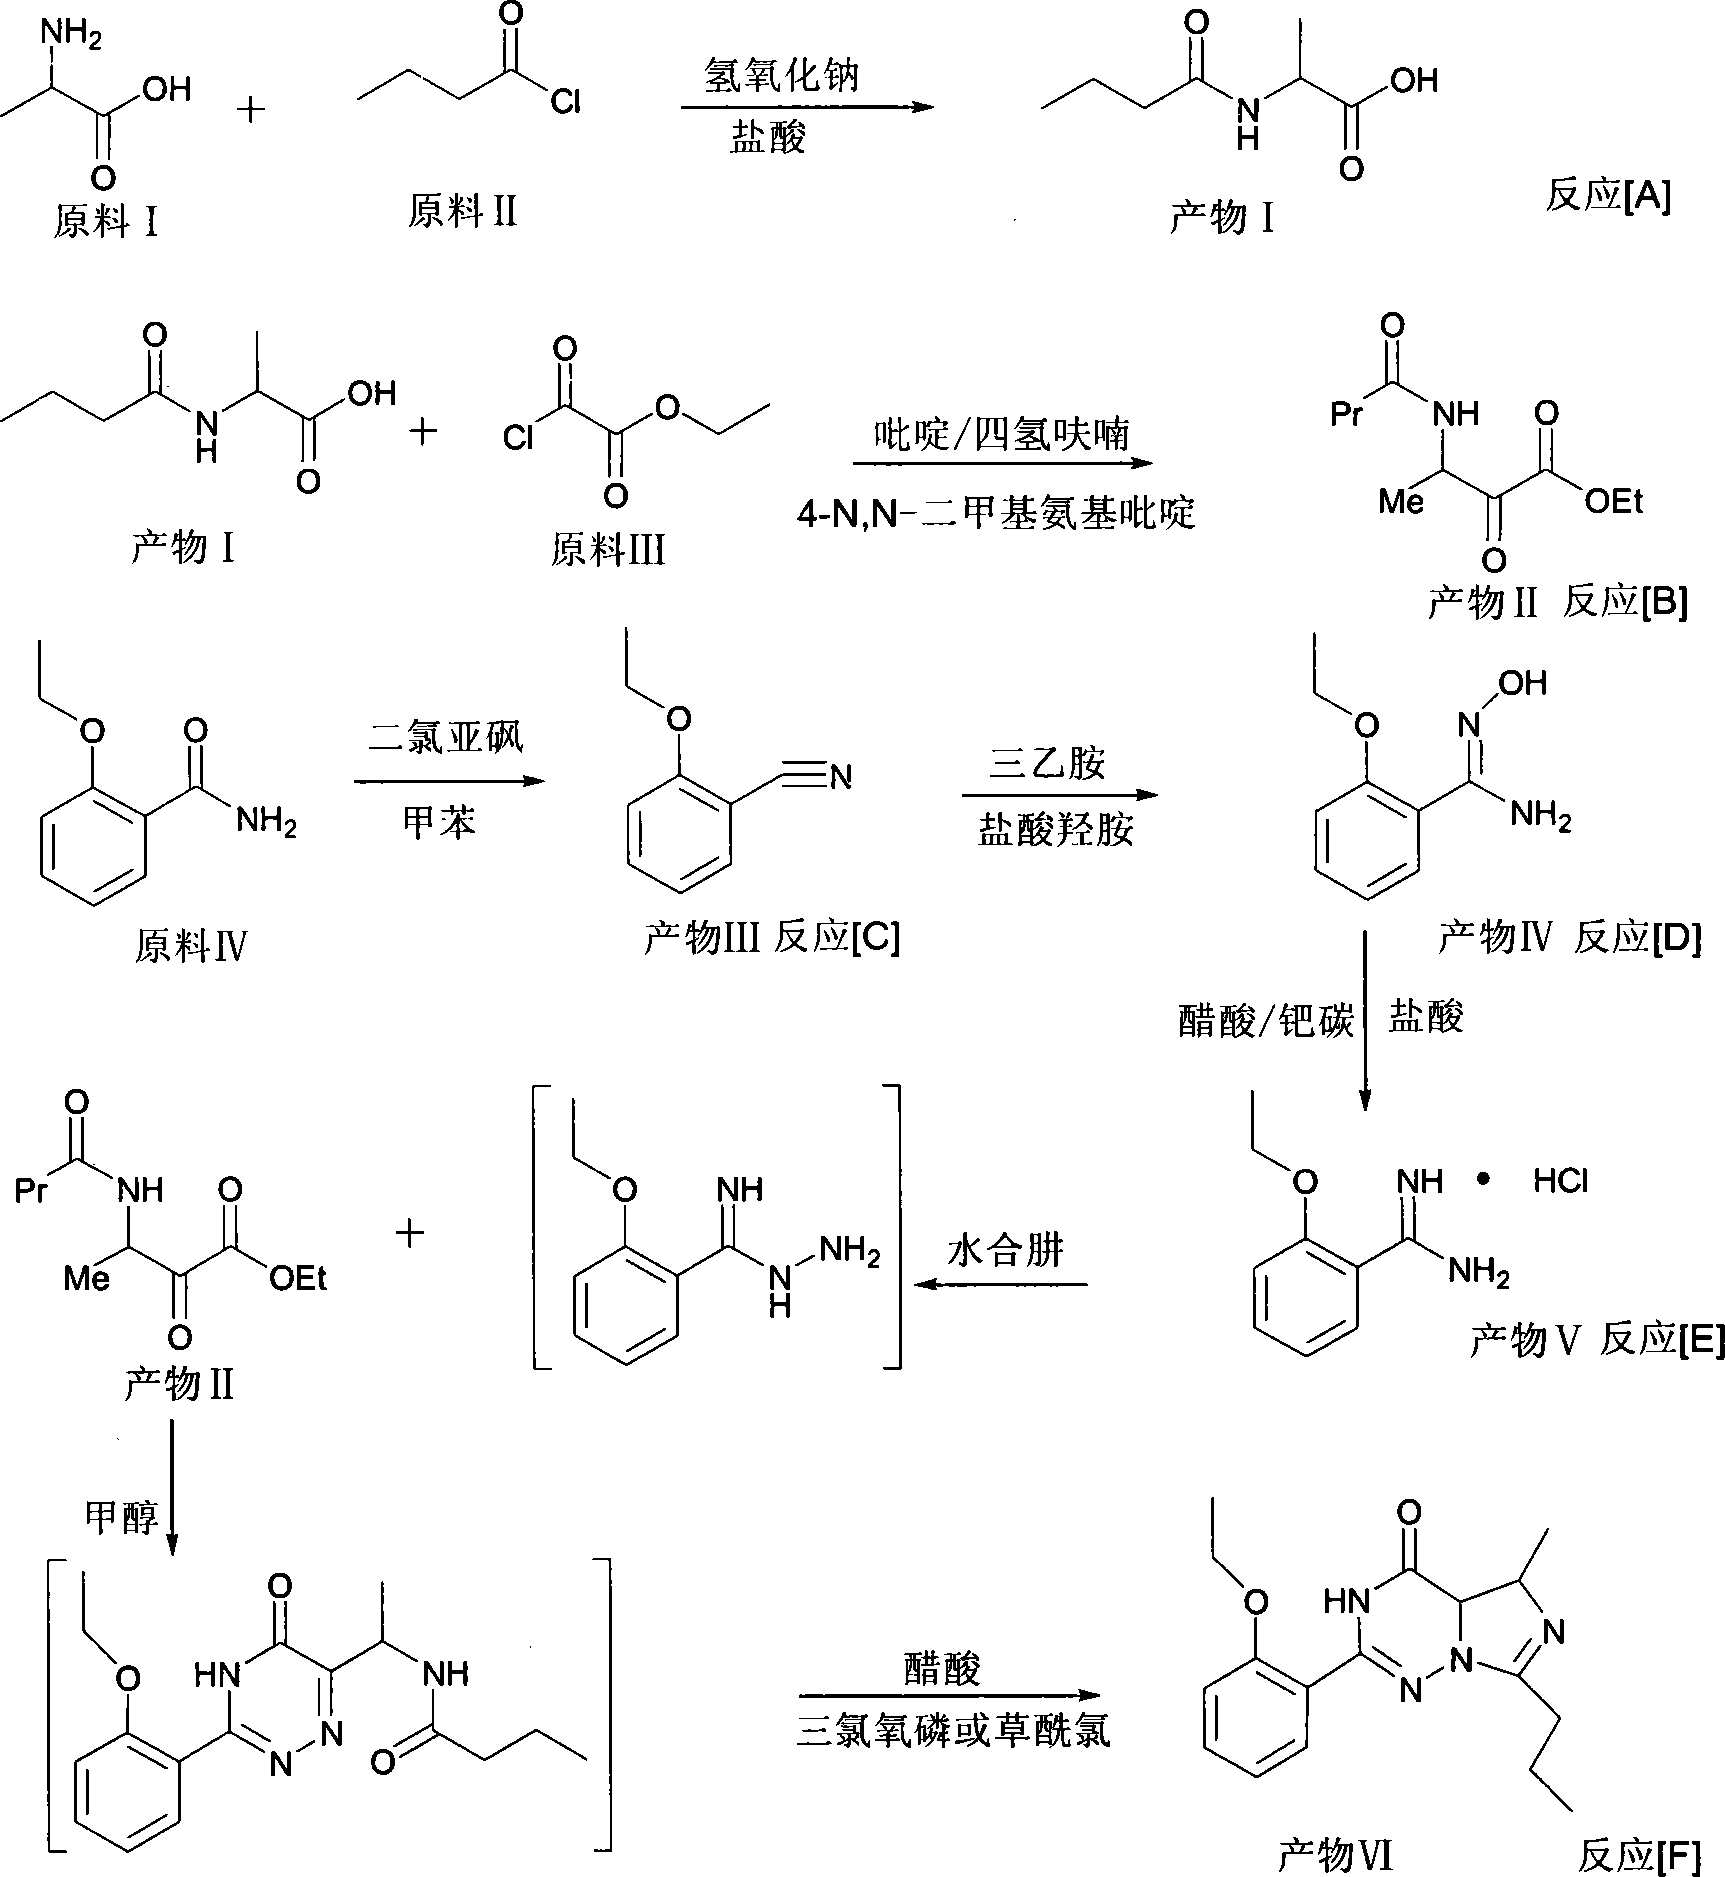 Method for synthesizing Vardenafil hydrochloric acid